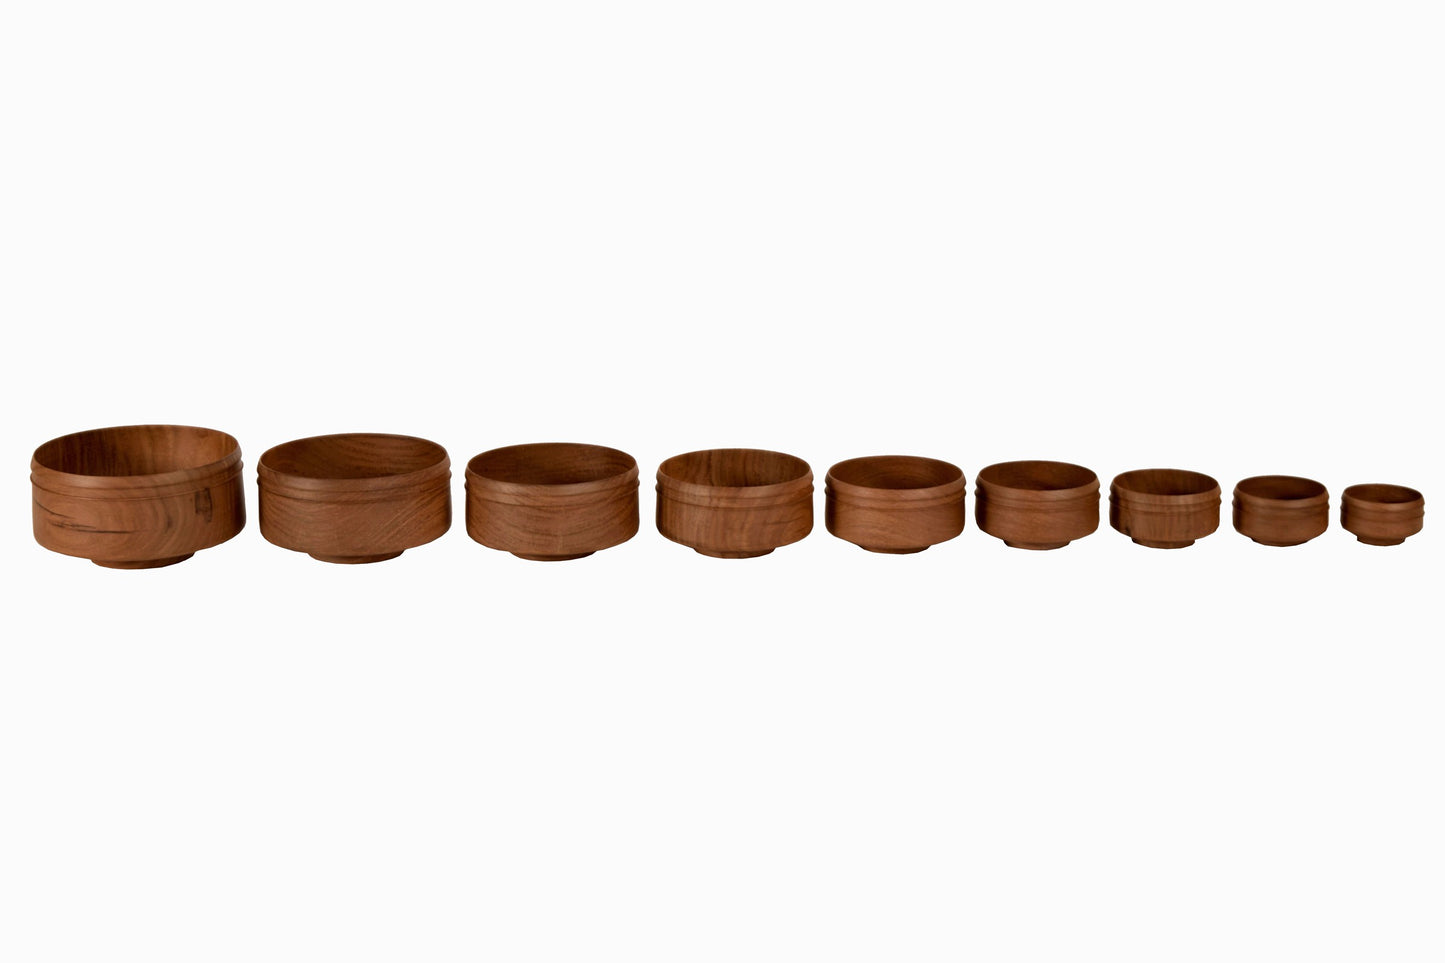 Jain monk wooden bowls (set of nine)